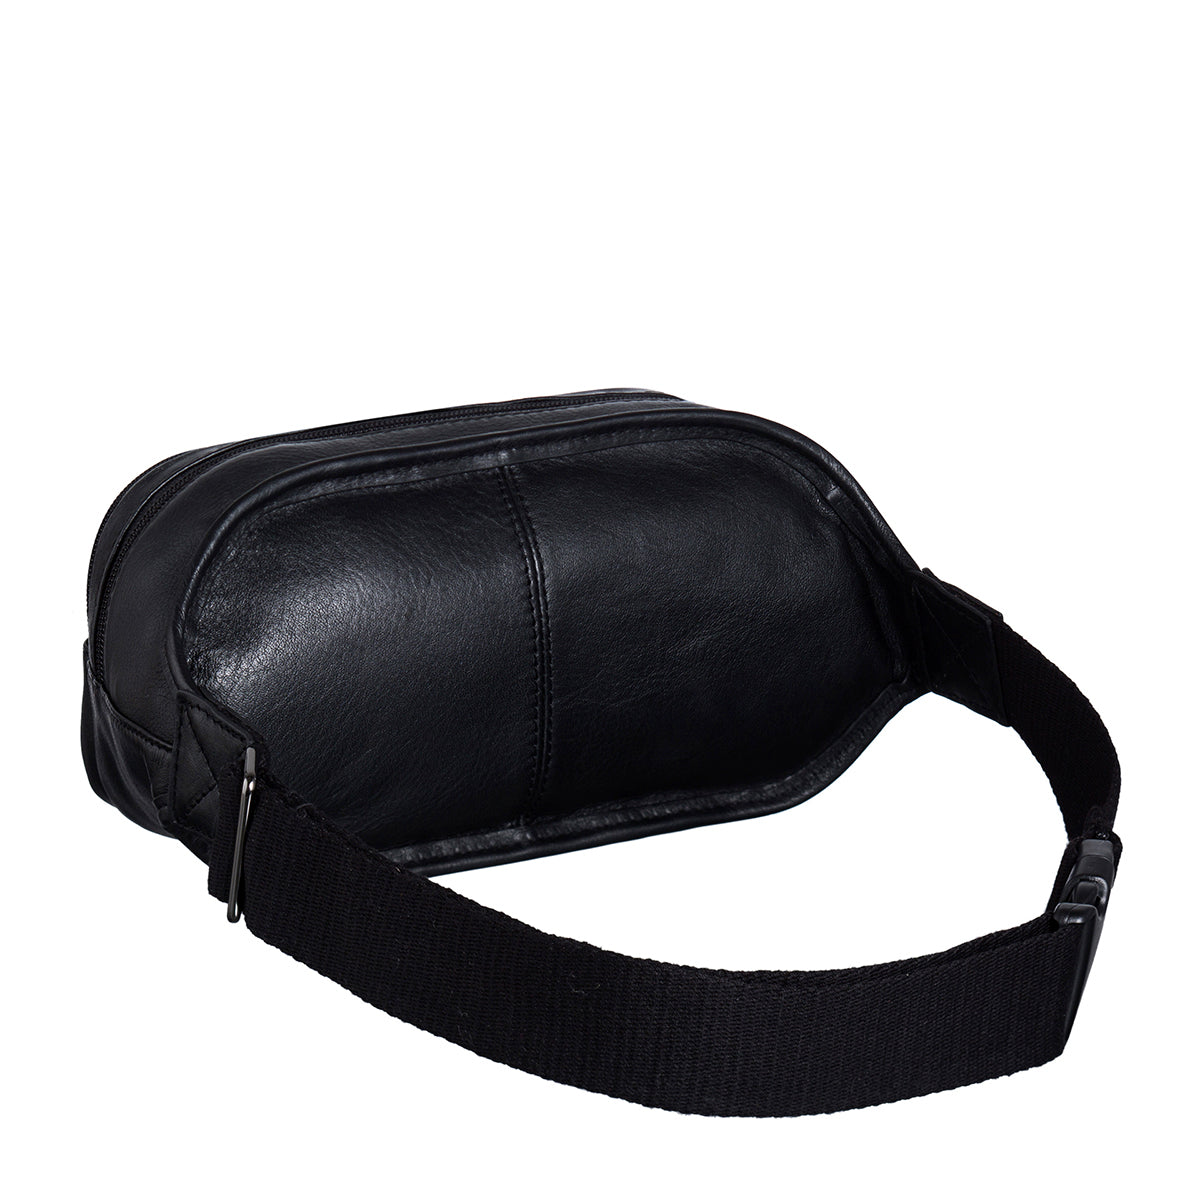 EnzoDesign Cowhide Leather Waist Bag 